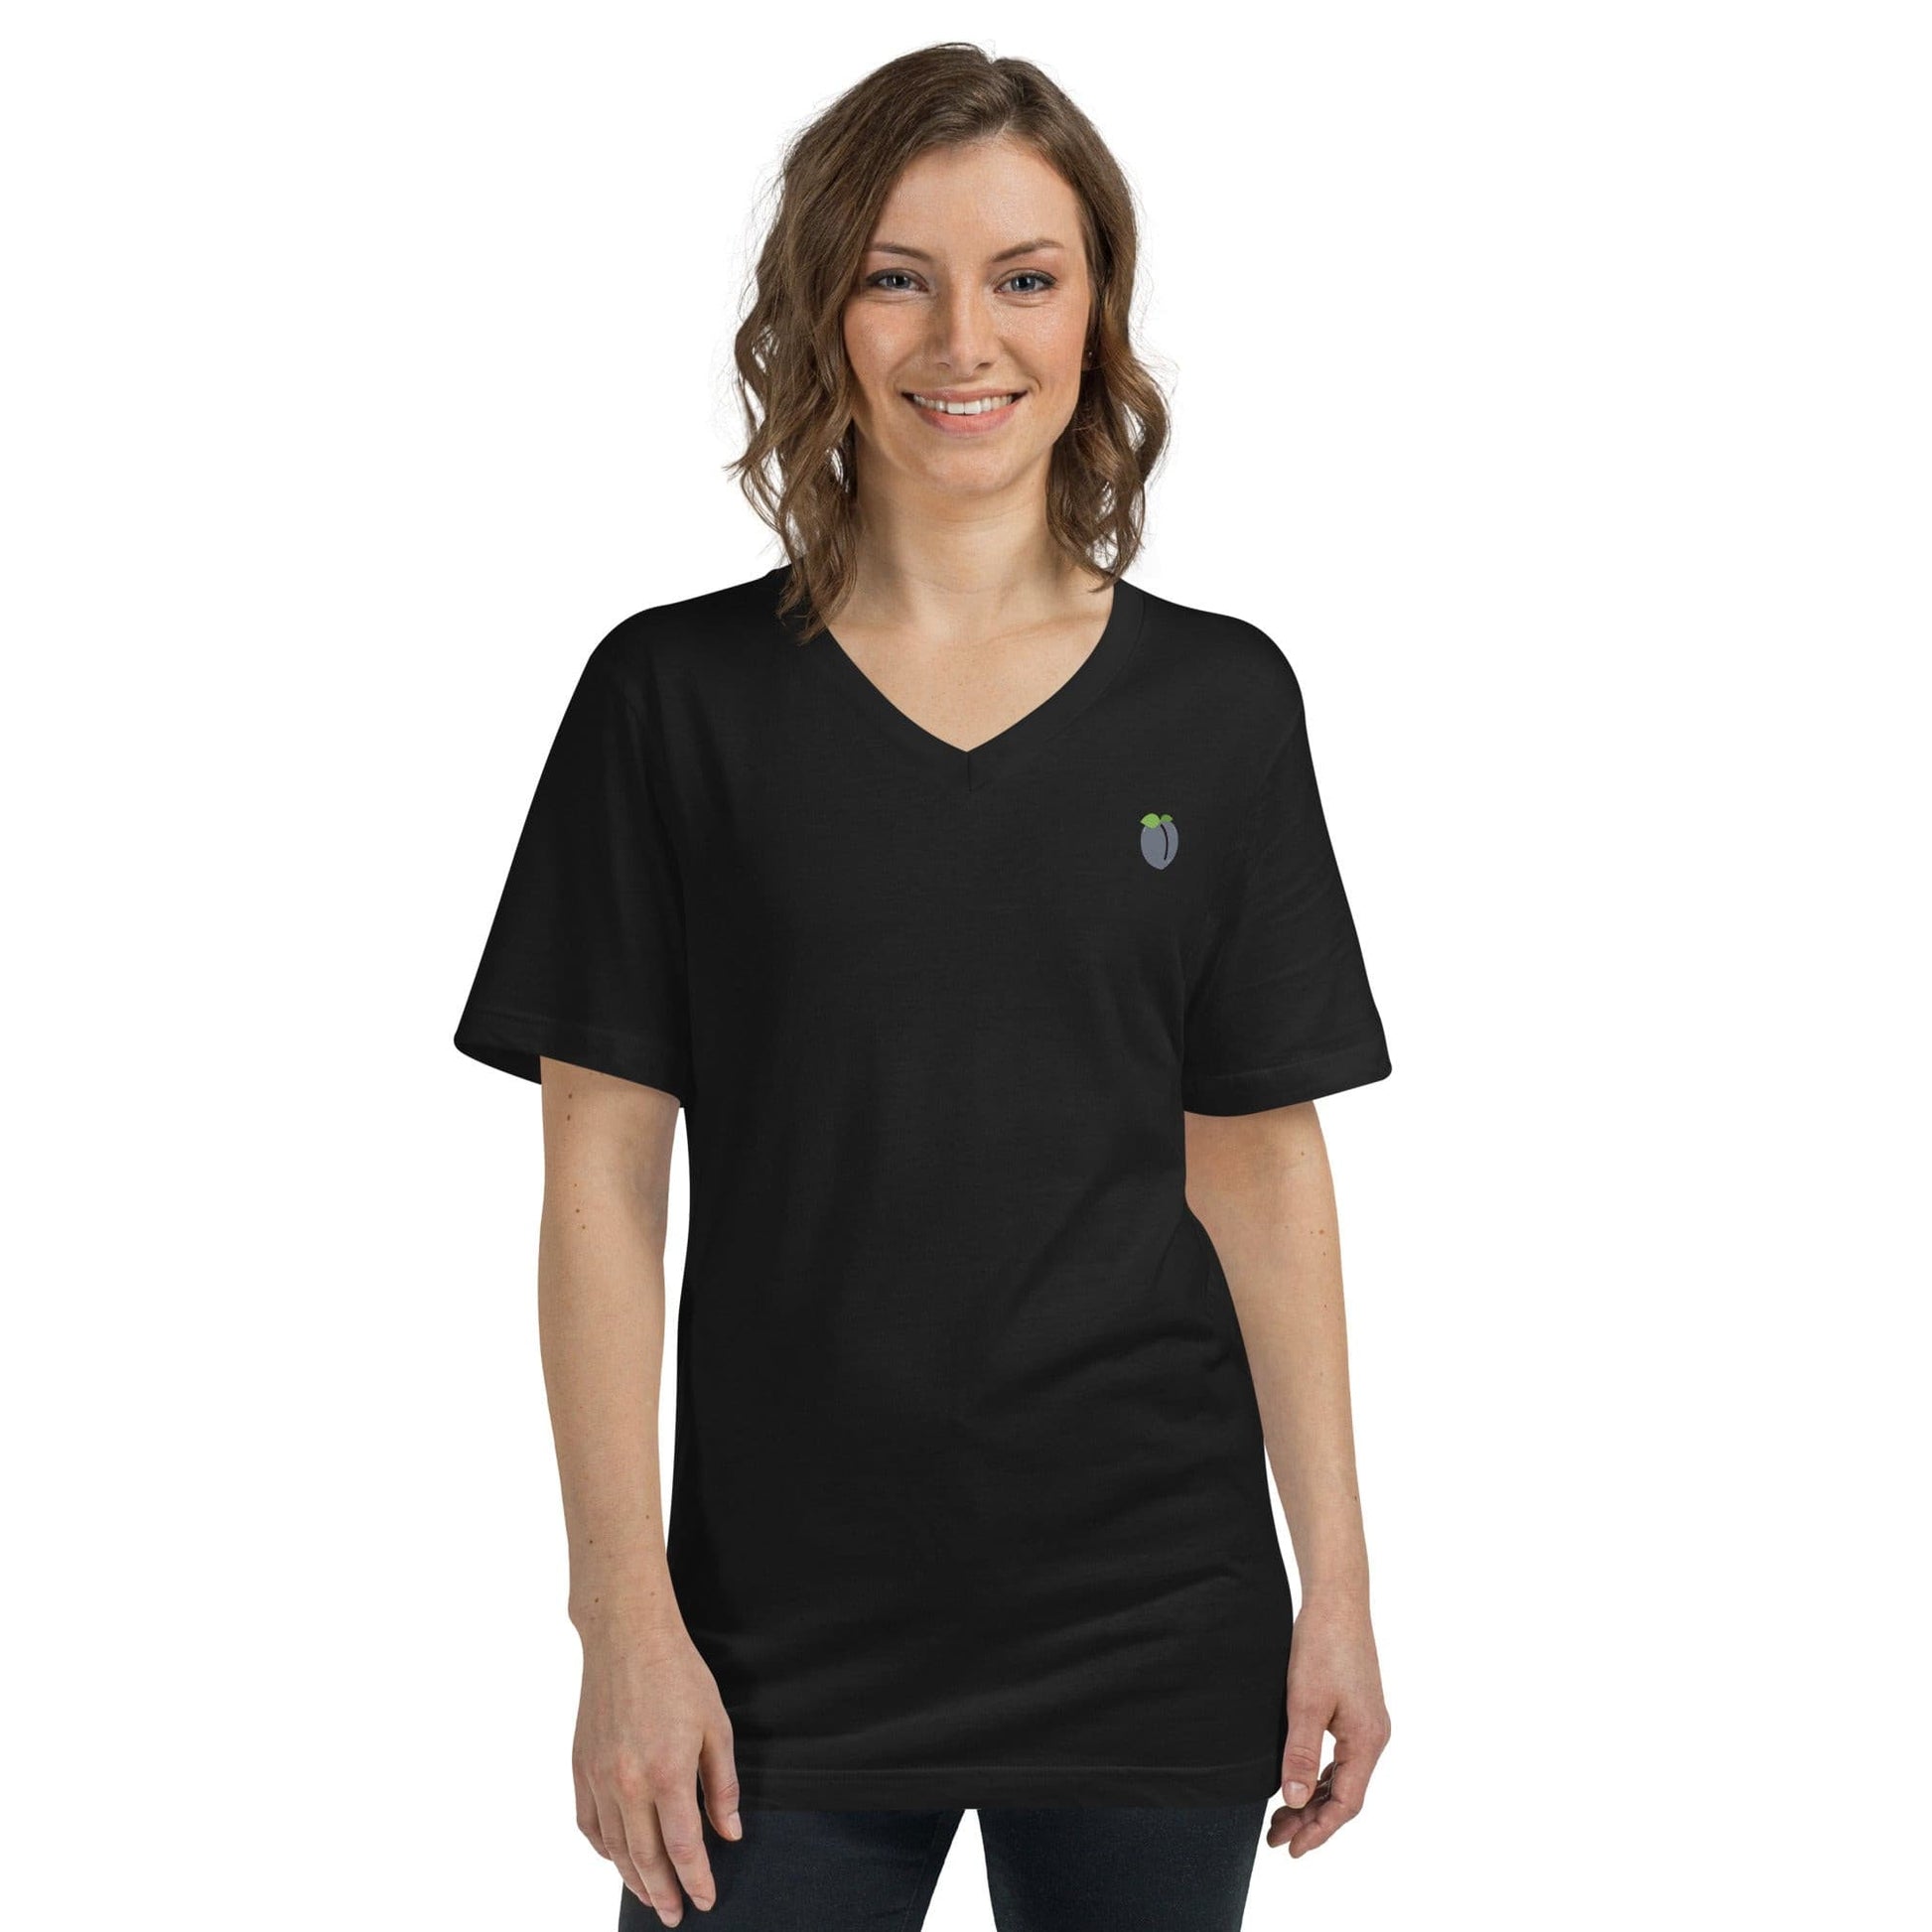 Platinum Unisex Short Sleeve V-Neck T-Shirt.